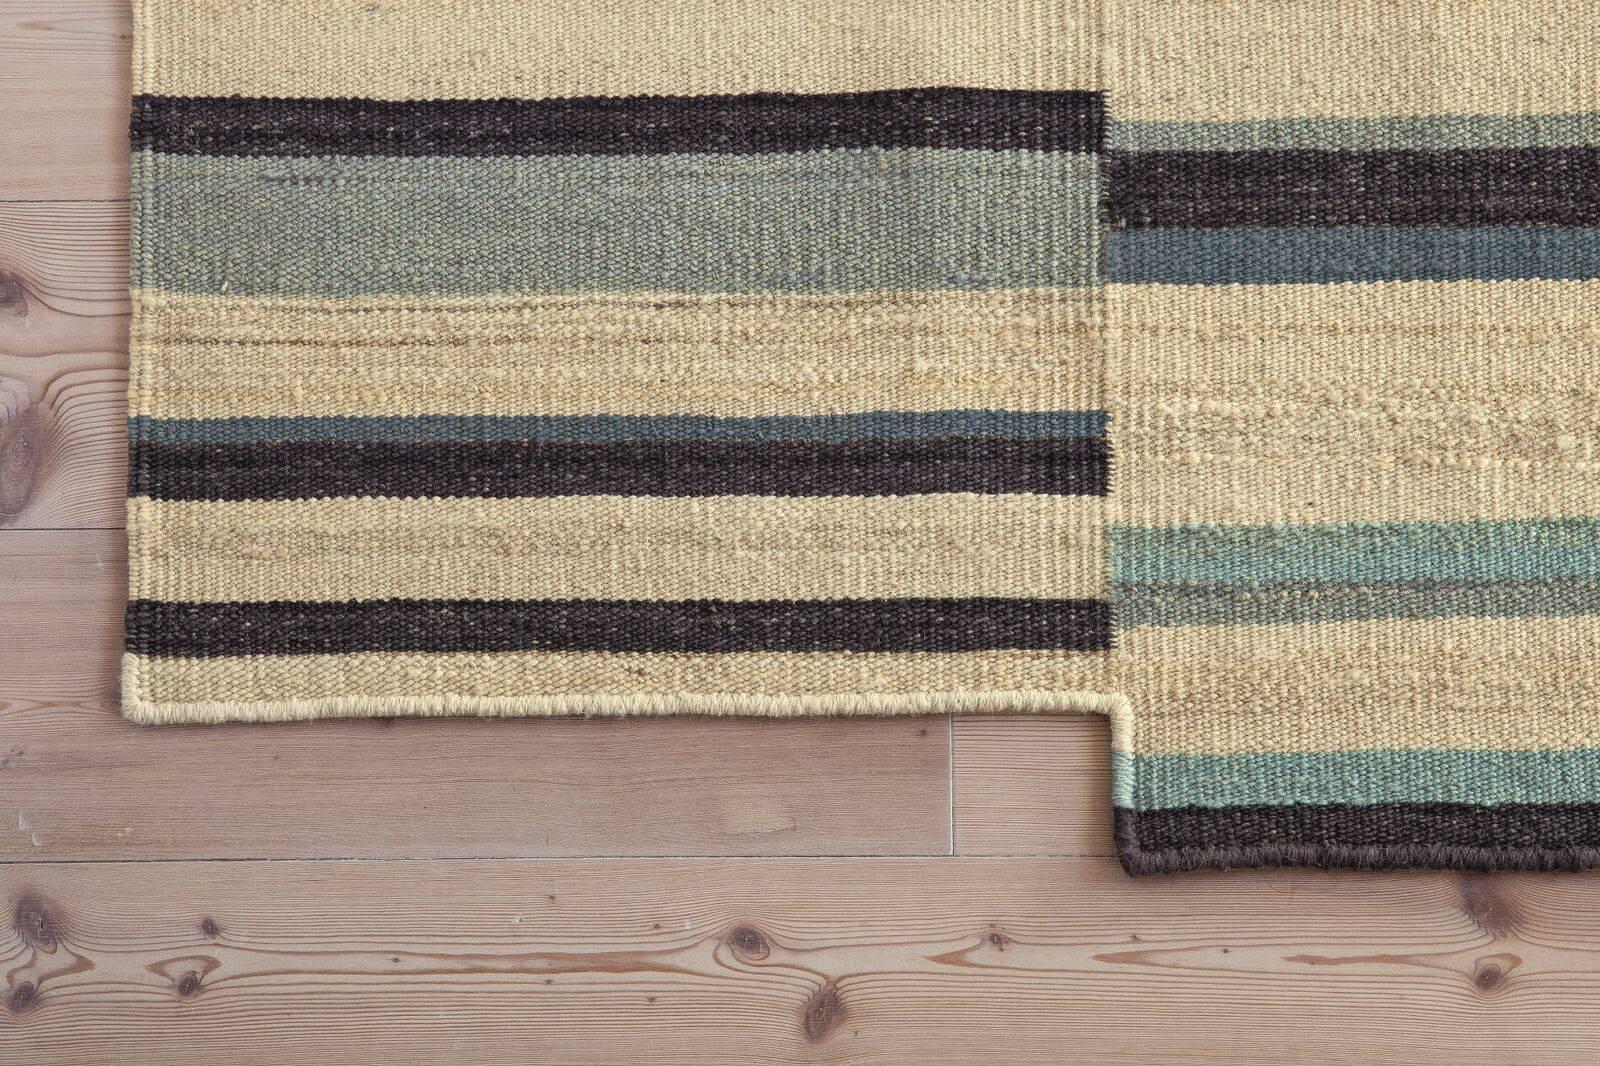 Pakistani Lattice 2 Hand-Loomed Afghan Wool Rug by Ronan & Erwan Bouroullec, Medium For Sale